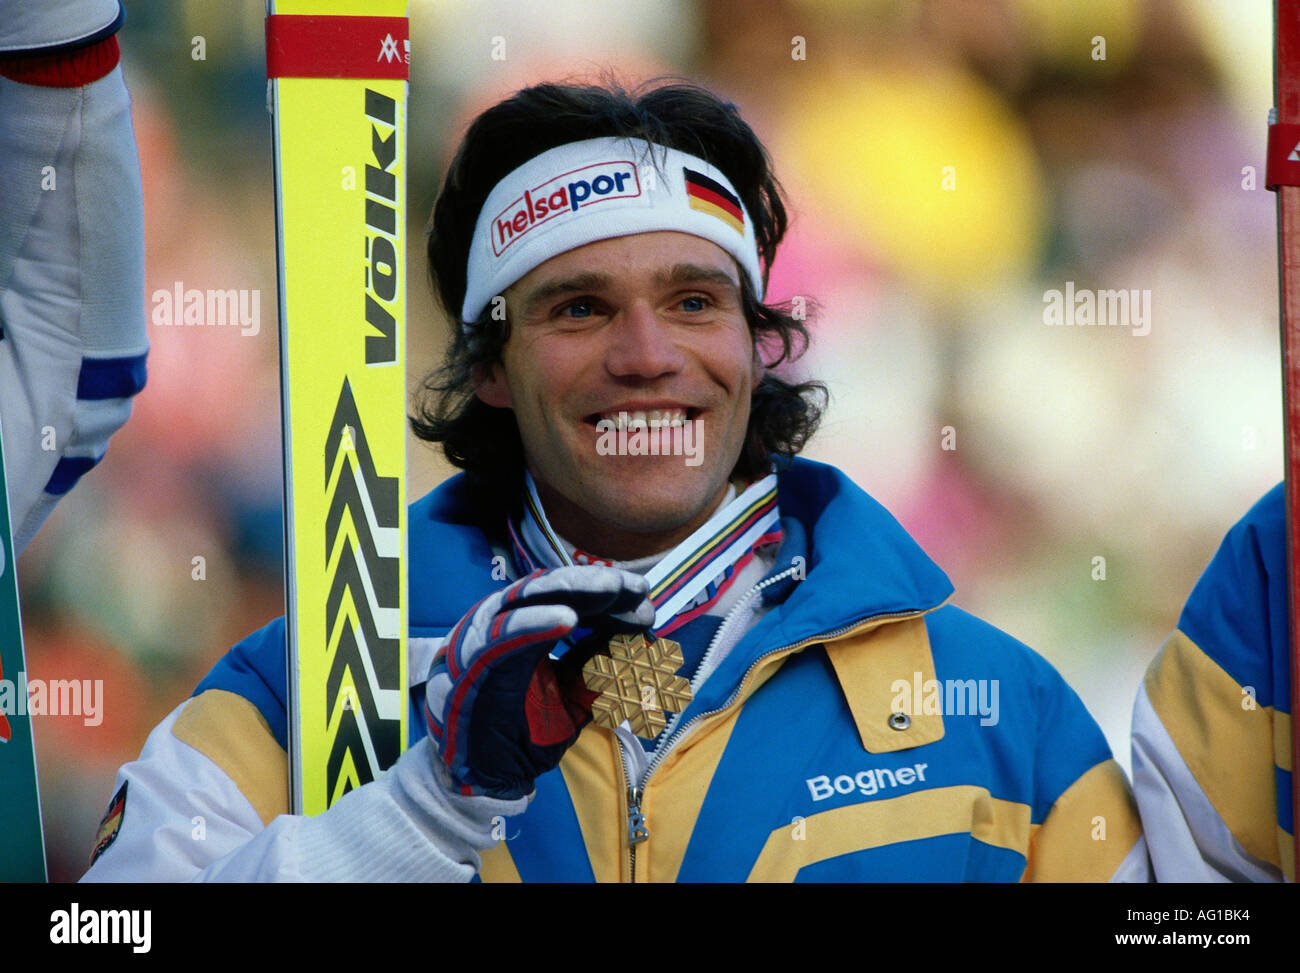 Wörndl, Frank, * 7.1.1959, German athlete, portrait, ski world championship, Crans-Montana, Stock Photo